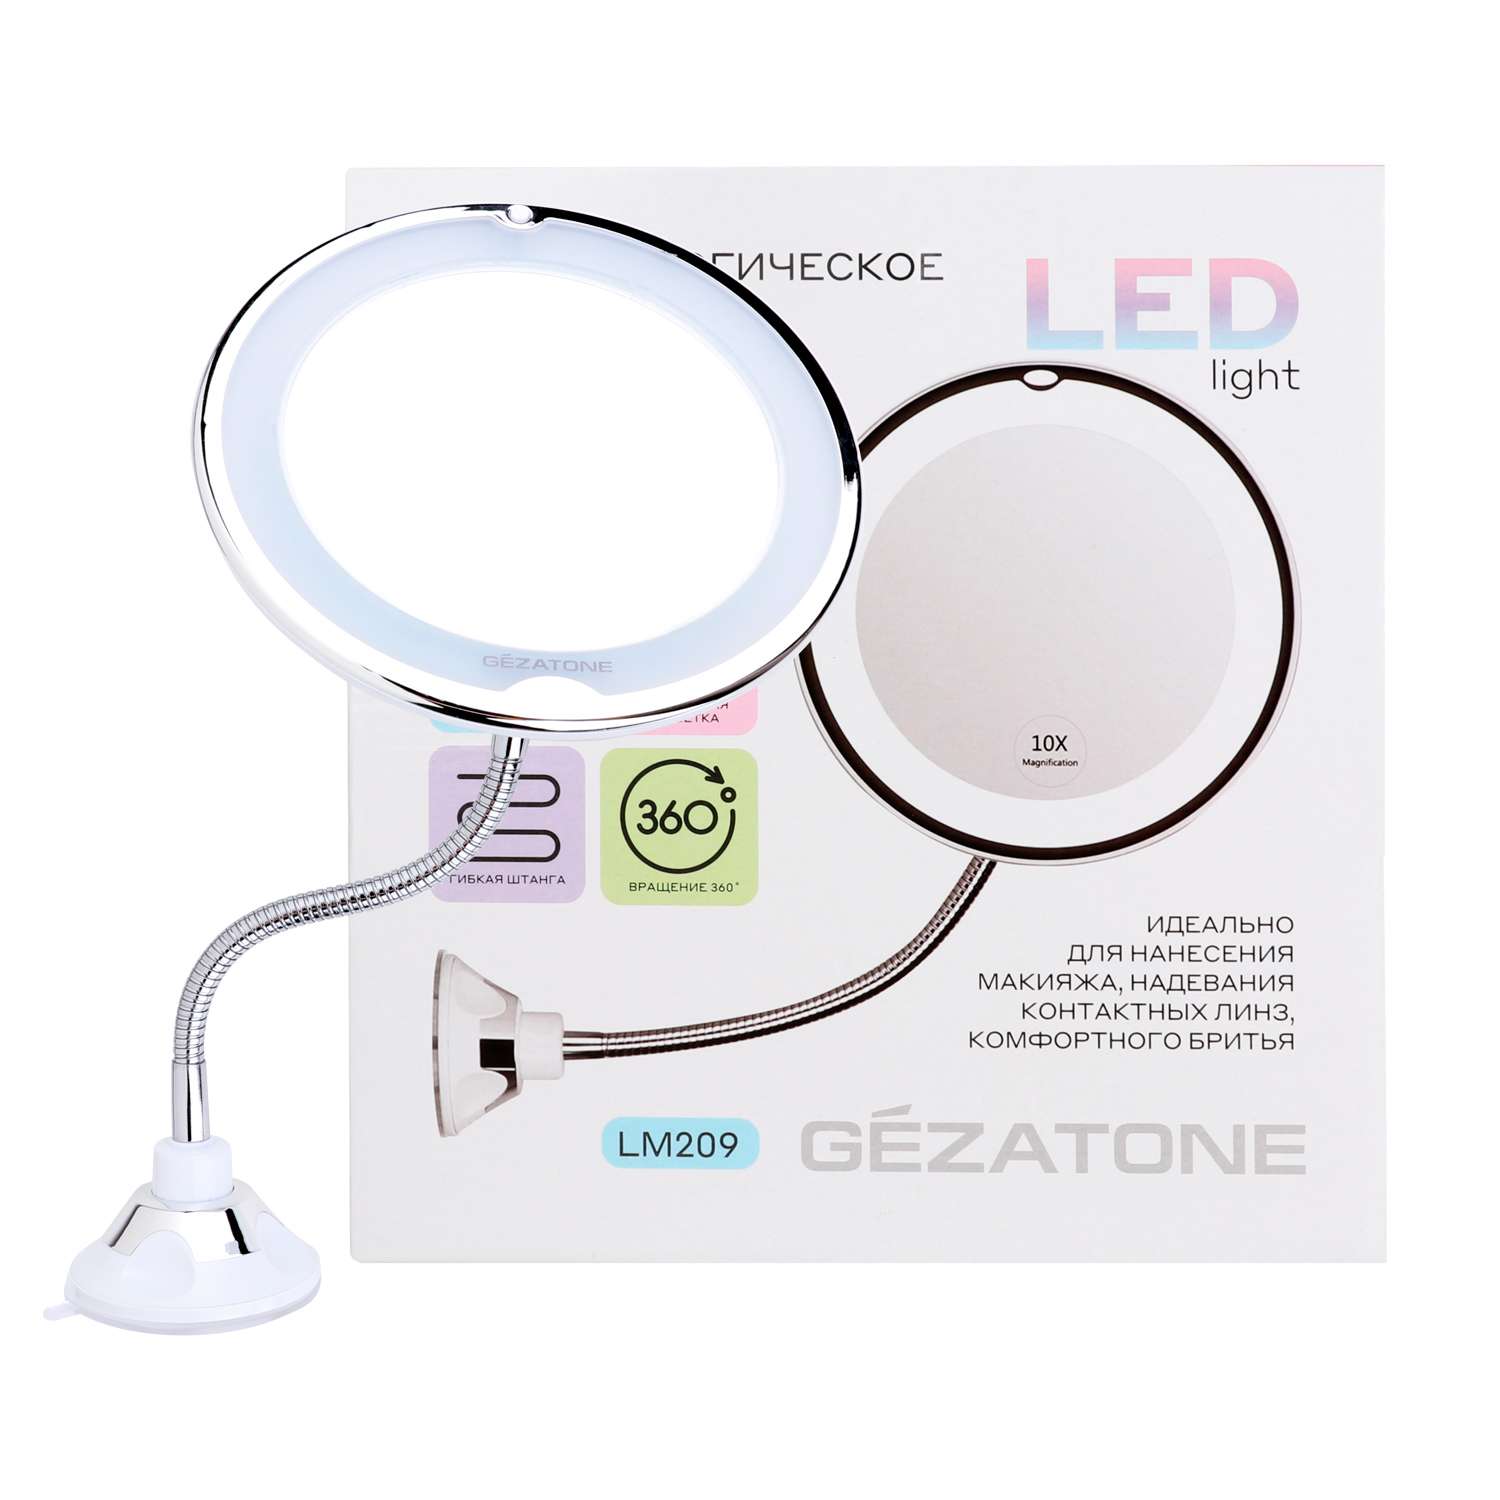 Зеркало Gezatone LM209 косметологическое 10x с подсветкой на гибкой штанге и присоске - фото 2